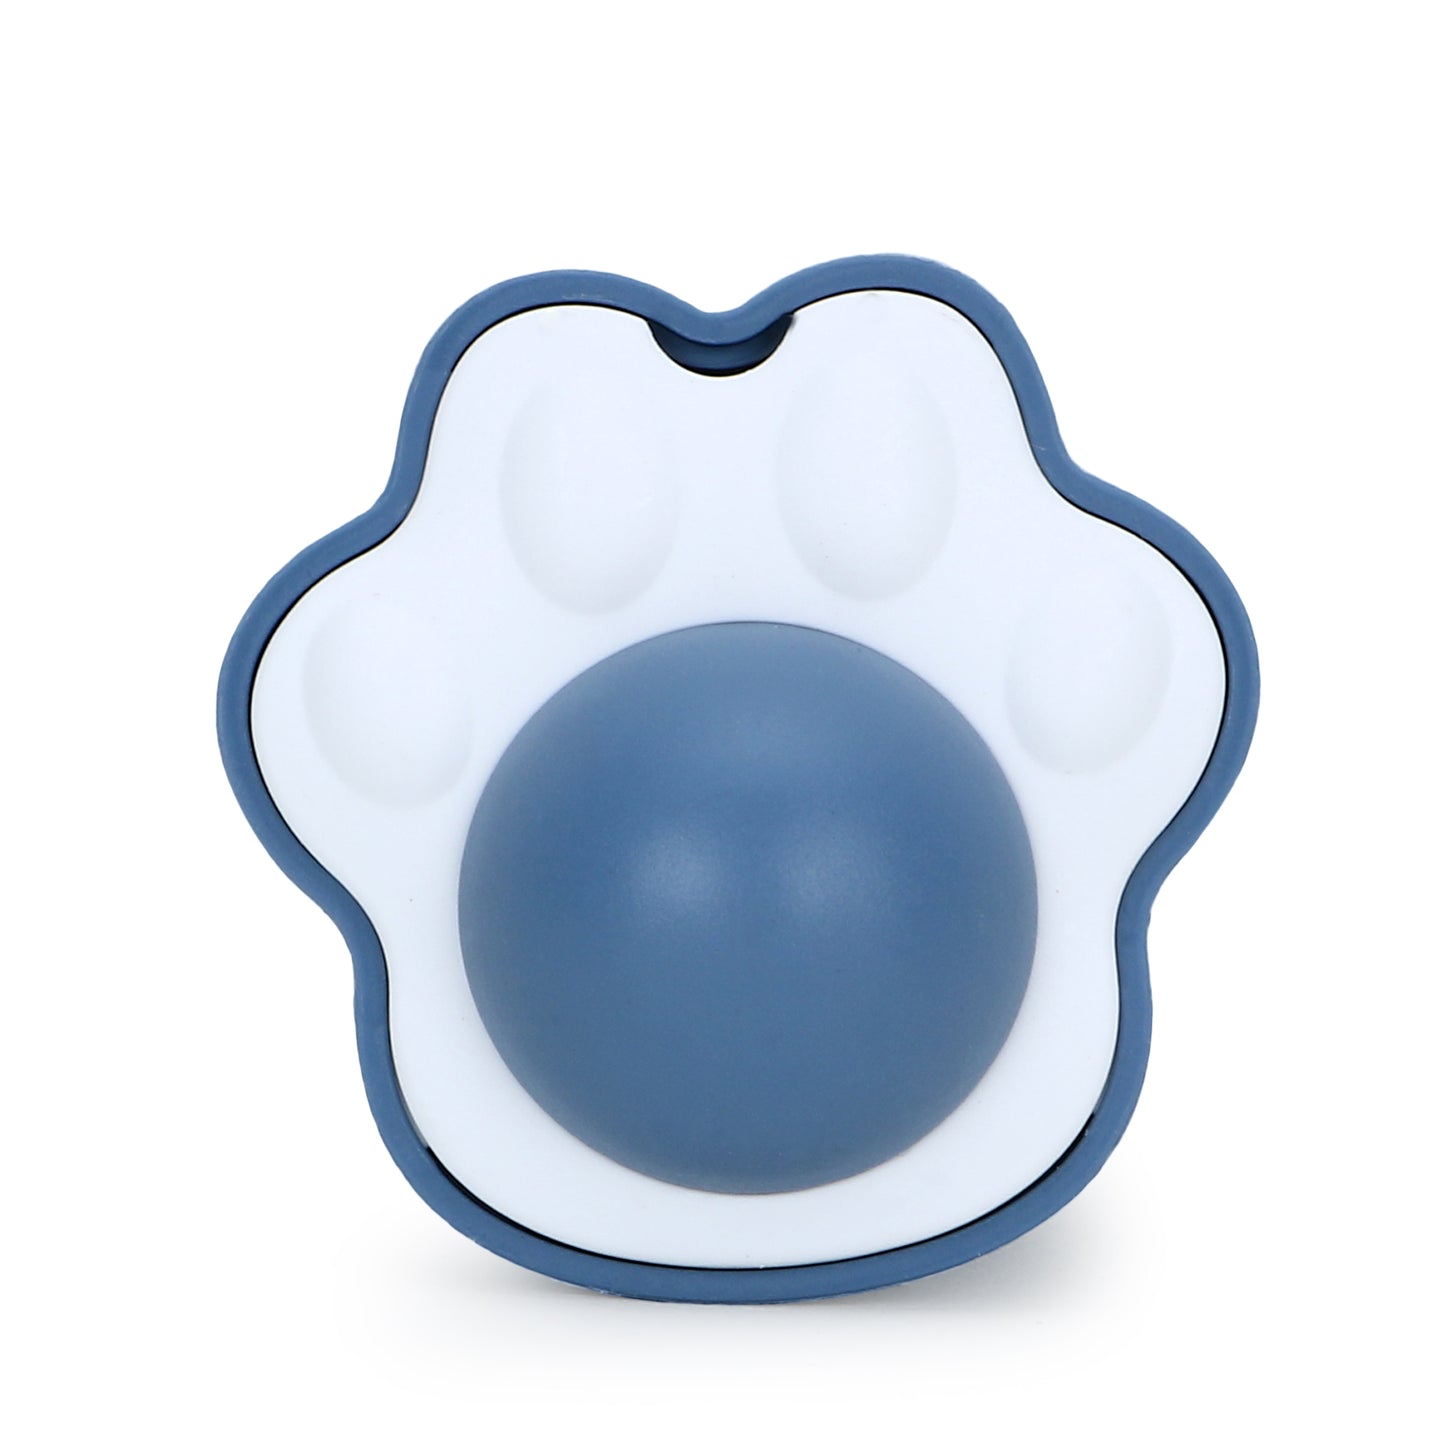 Basil Mint Balls Interactive Catnip Toy with Lickable Balls